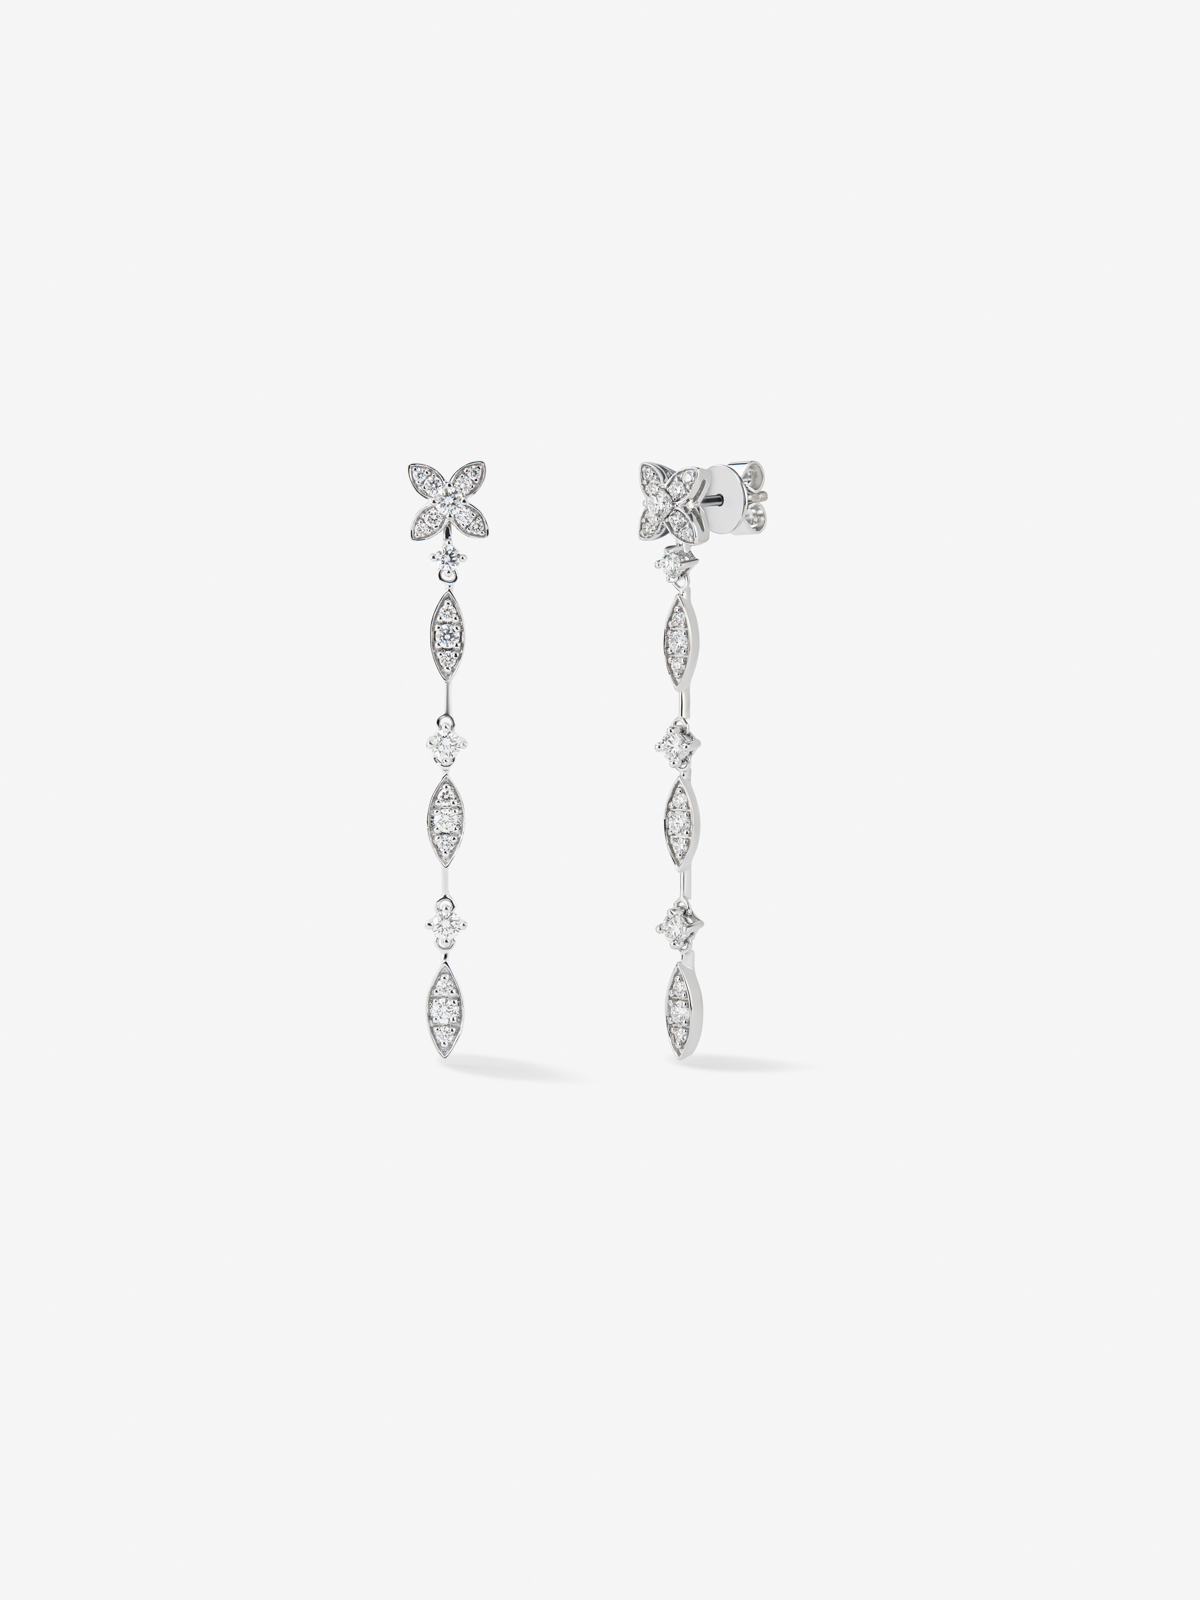 Detachable 18K white gold earrings with 0.83 ct brilliant cut diamonds